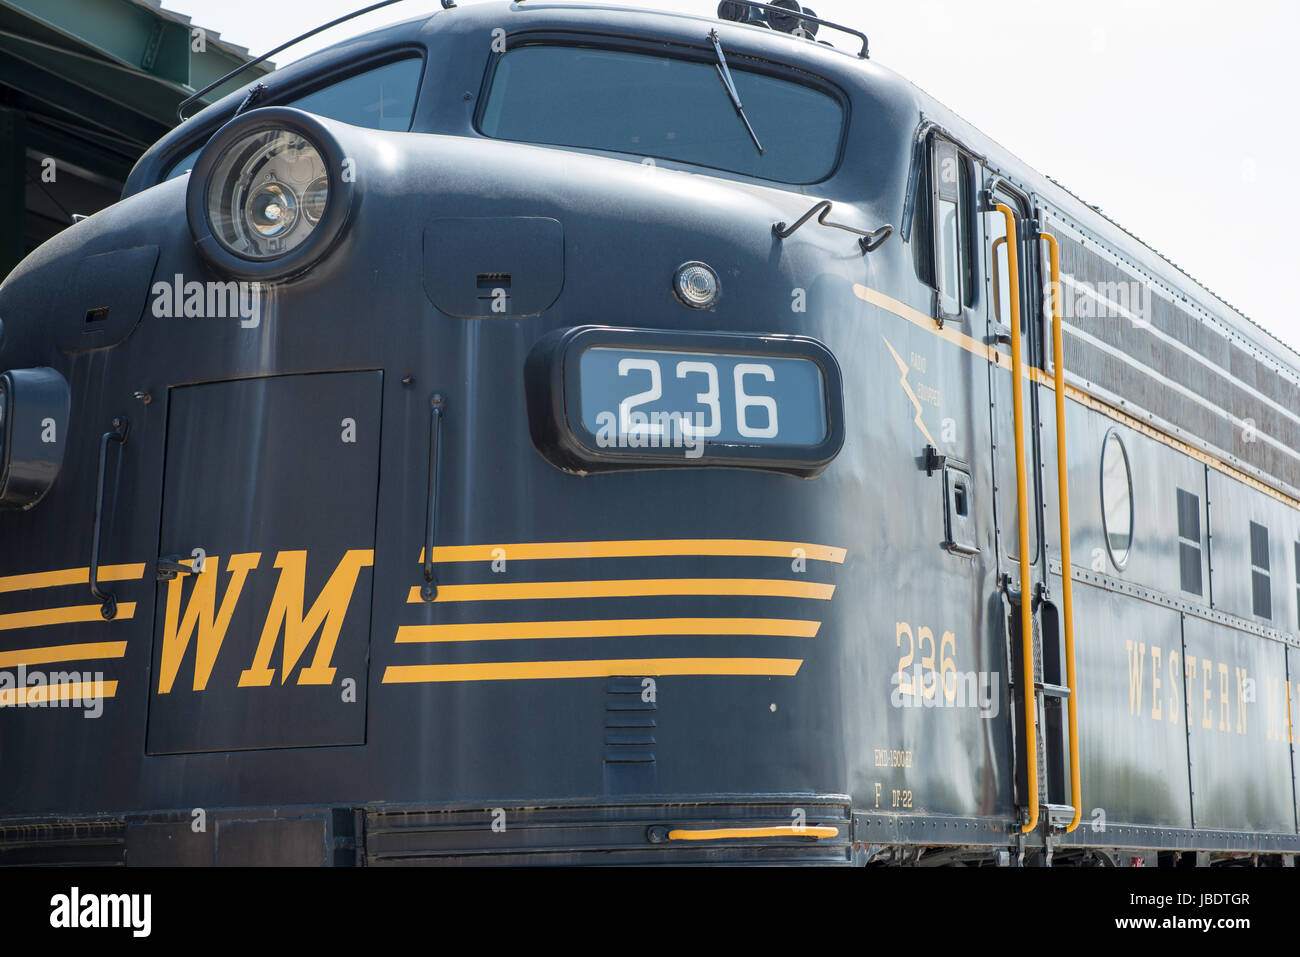 BALITMORE, MD - 15 aprile: WM No.236 Western Maryland ferrovia-GM EMD, modello F-7A, locomotiva diesel on April 15, 2017 Foto Stock